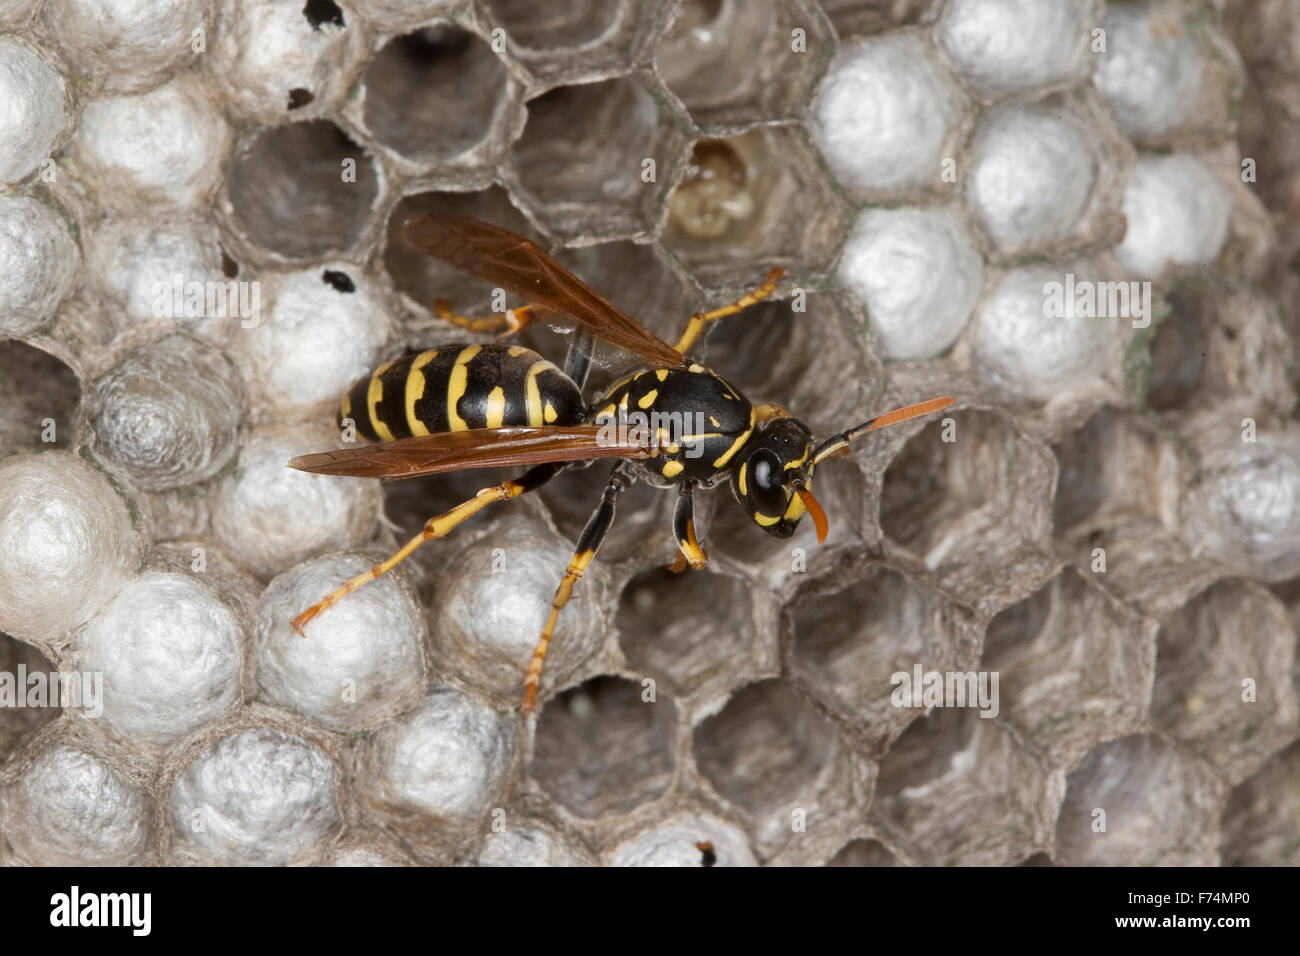 European paper wasp, Gallische Feldwespe, Französische Feldwespe, Polistes dominulus, Polistes dominula, Polistes gallicus Stock Photo